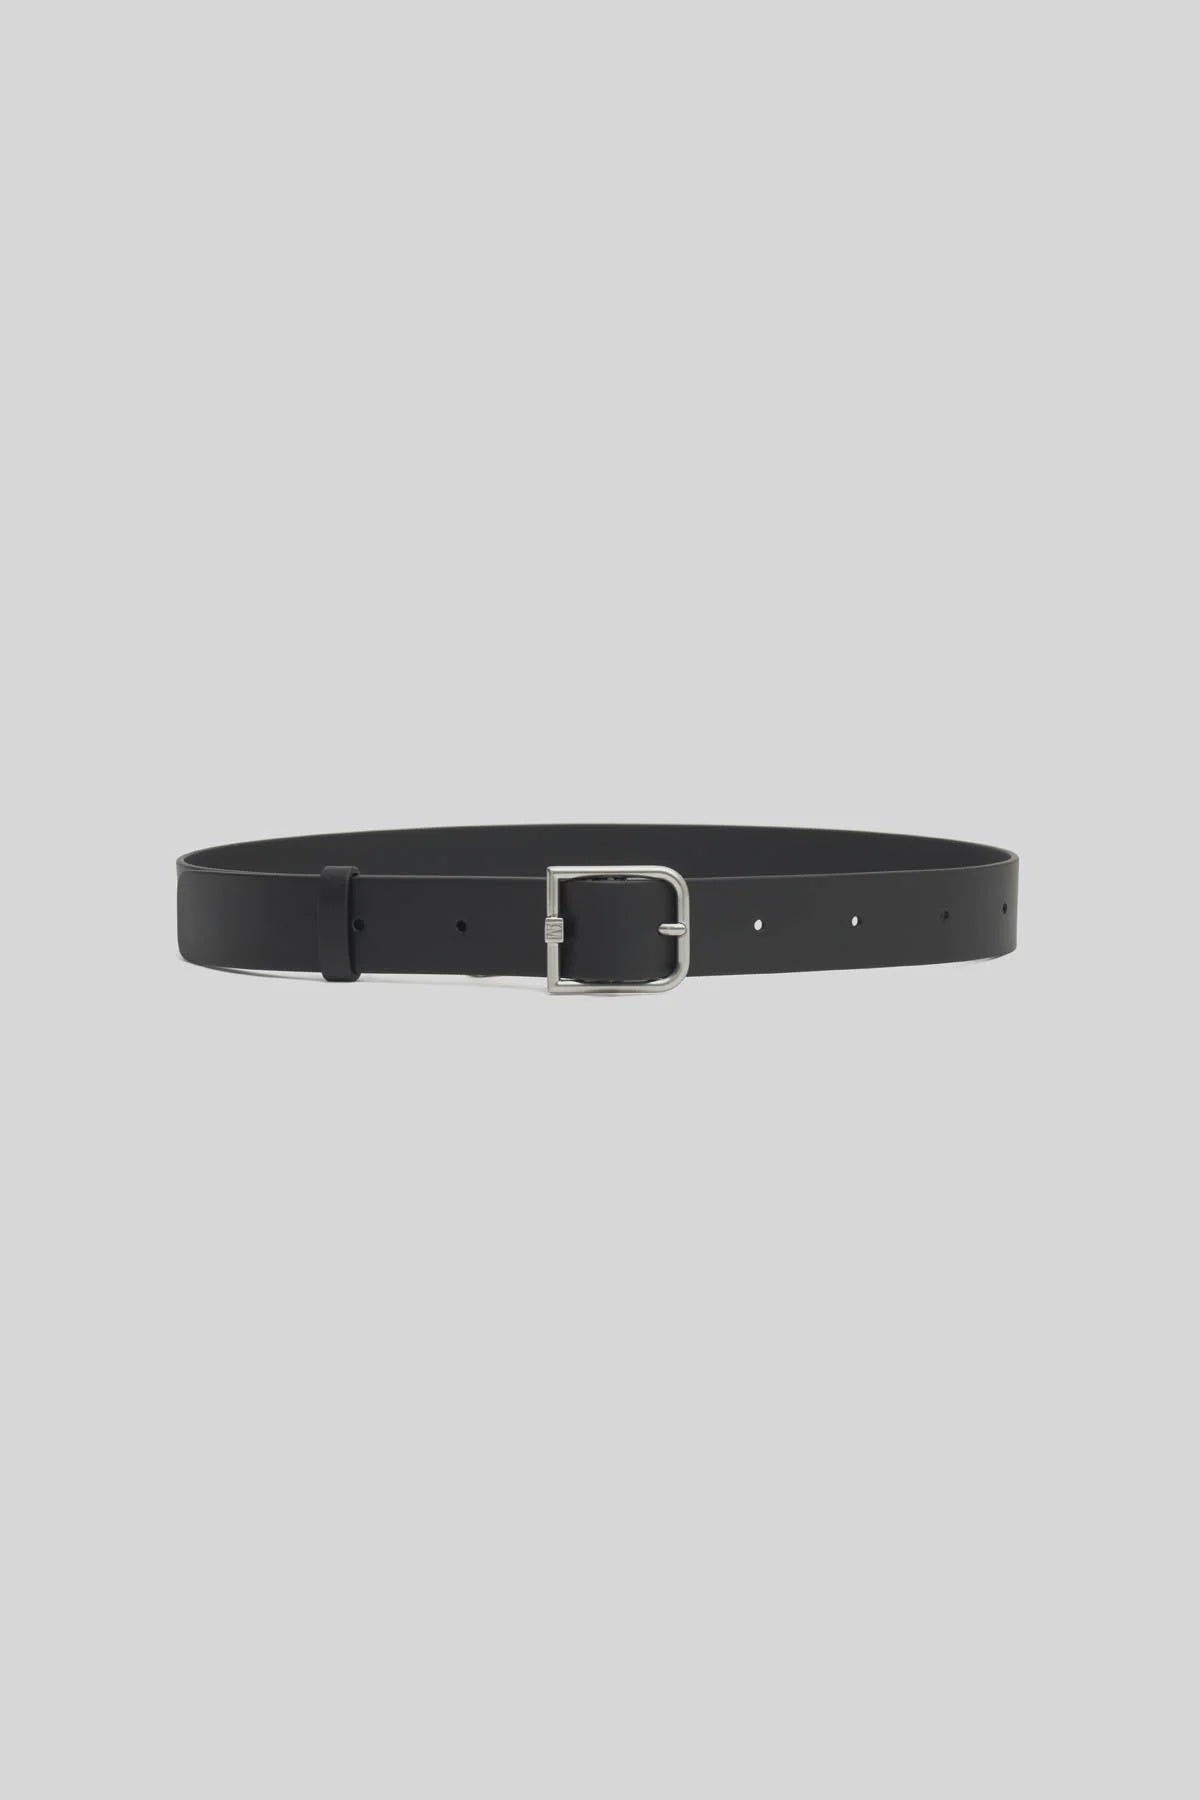 C&M Belts C&M | Addison Belt - Black w/ Silver